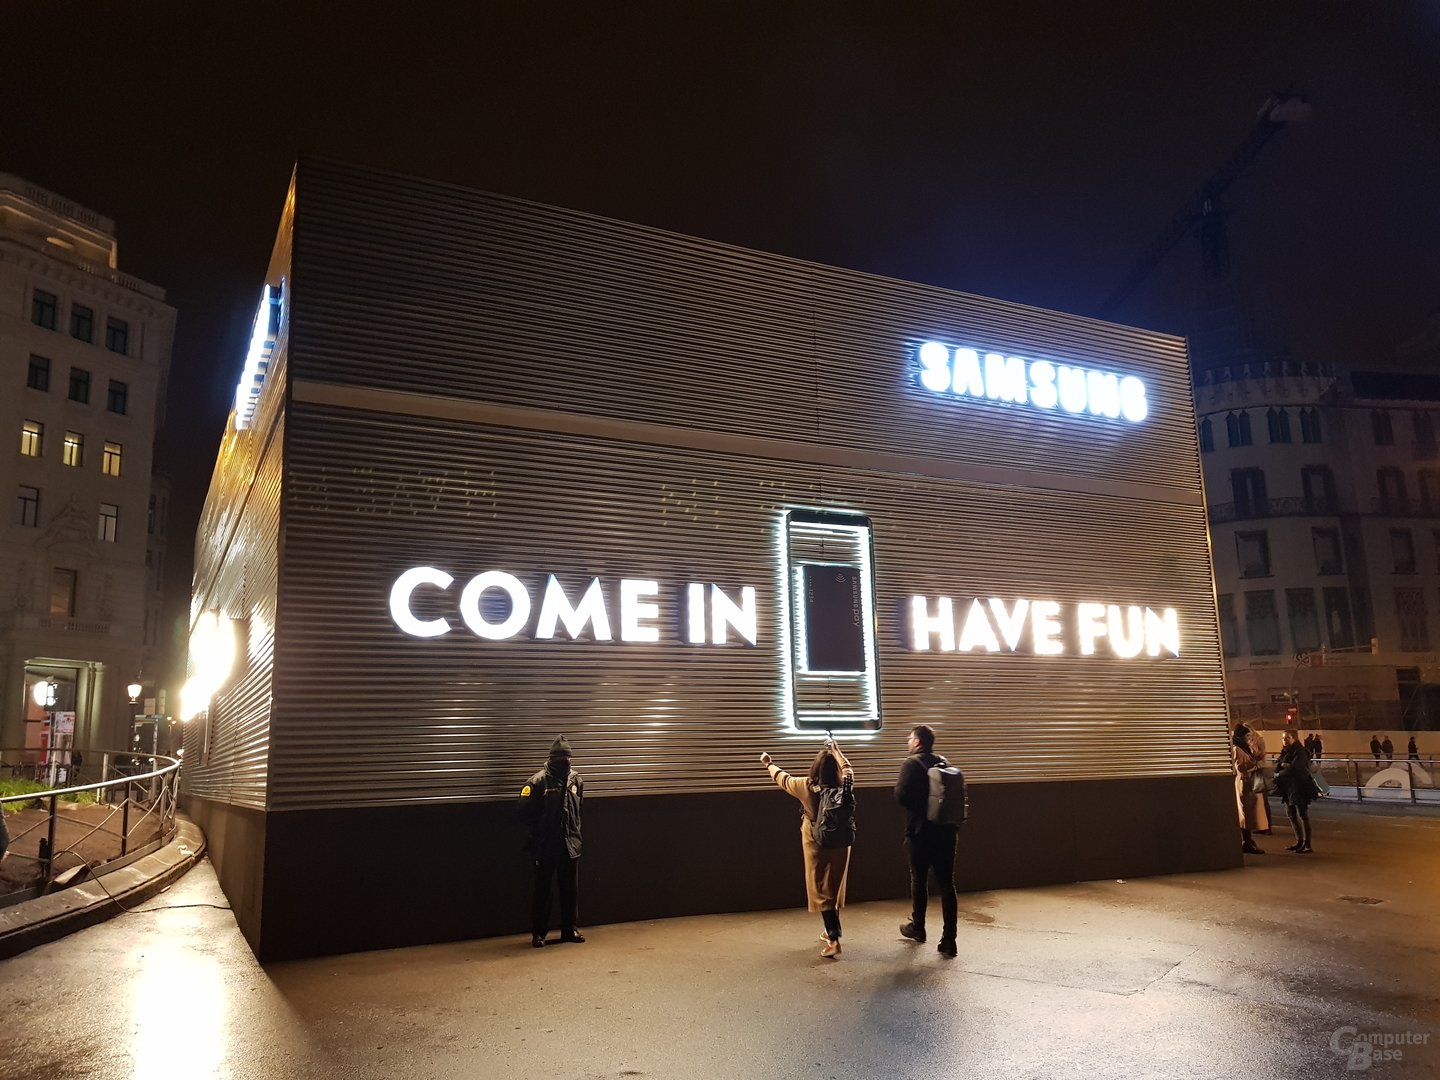 Samsung Galaxy Note 8 (f/1.7, ISO 250, 1/25 s)